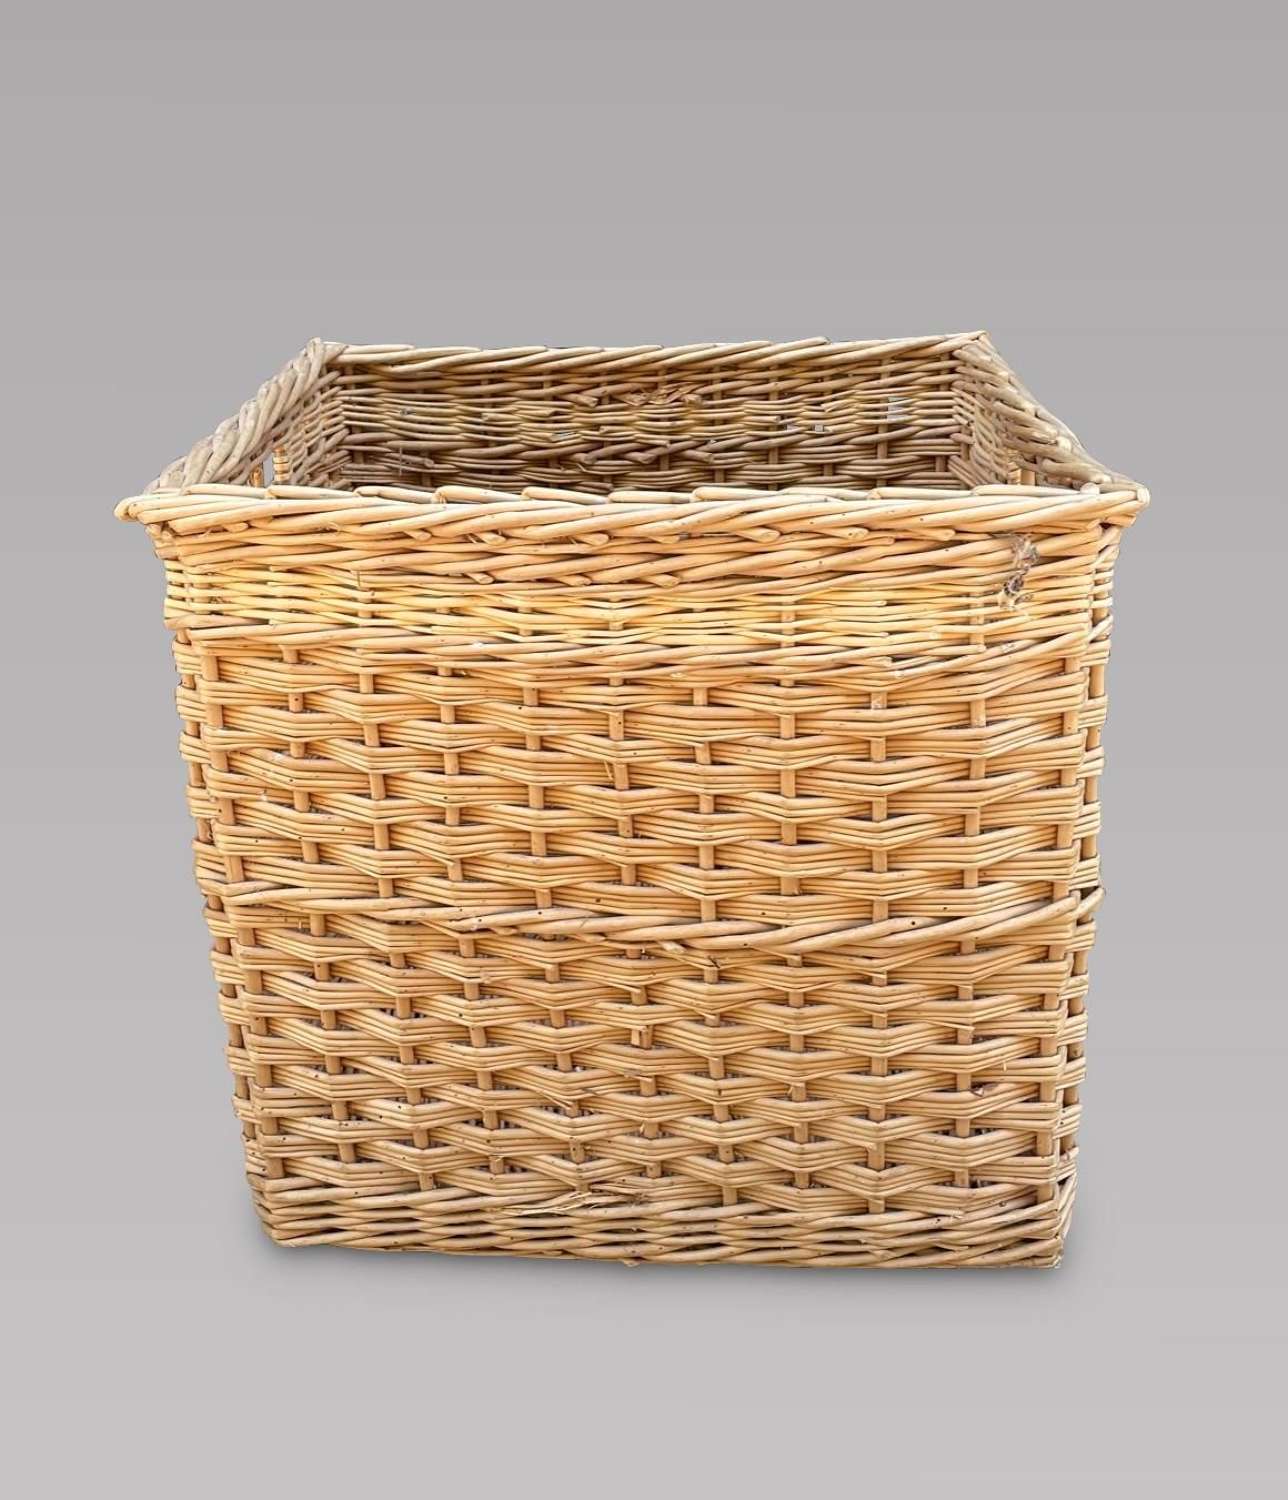 A Medium Sized Wicker Log Basket